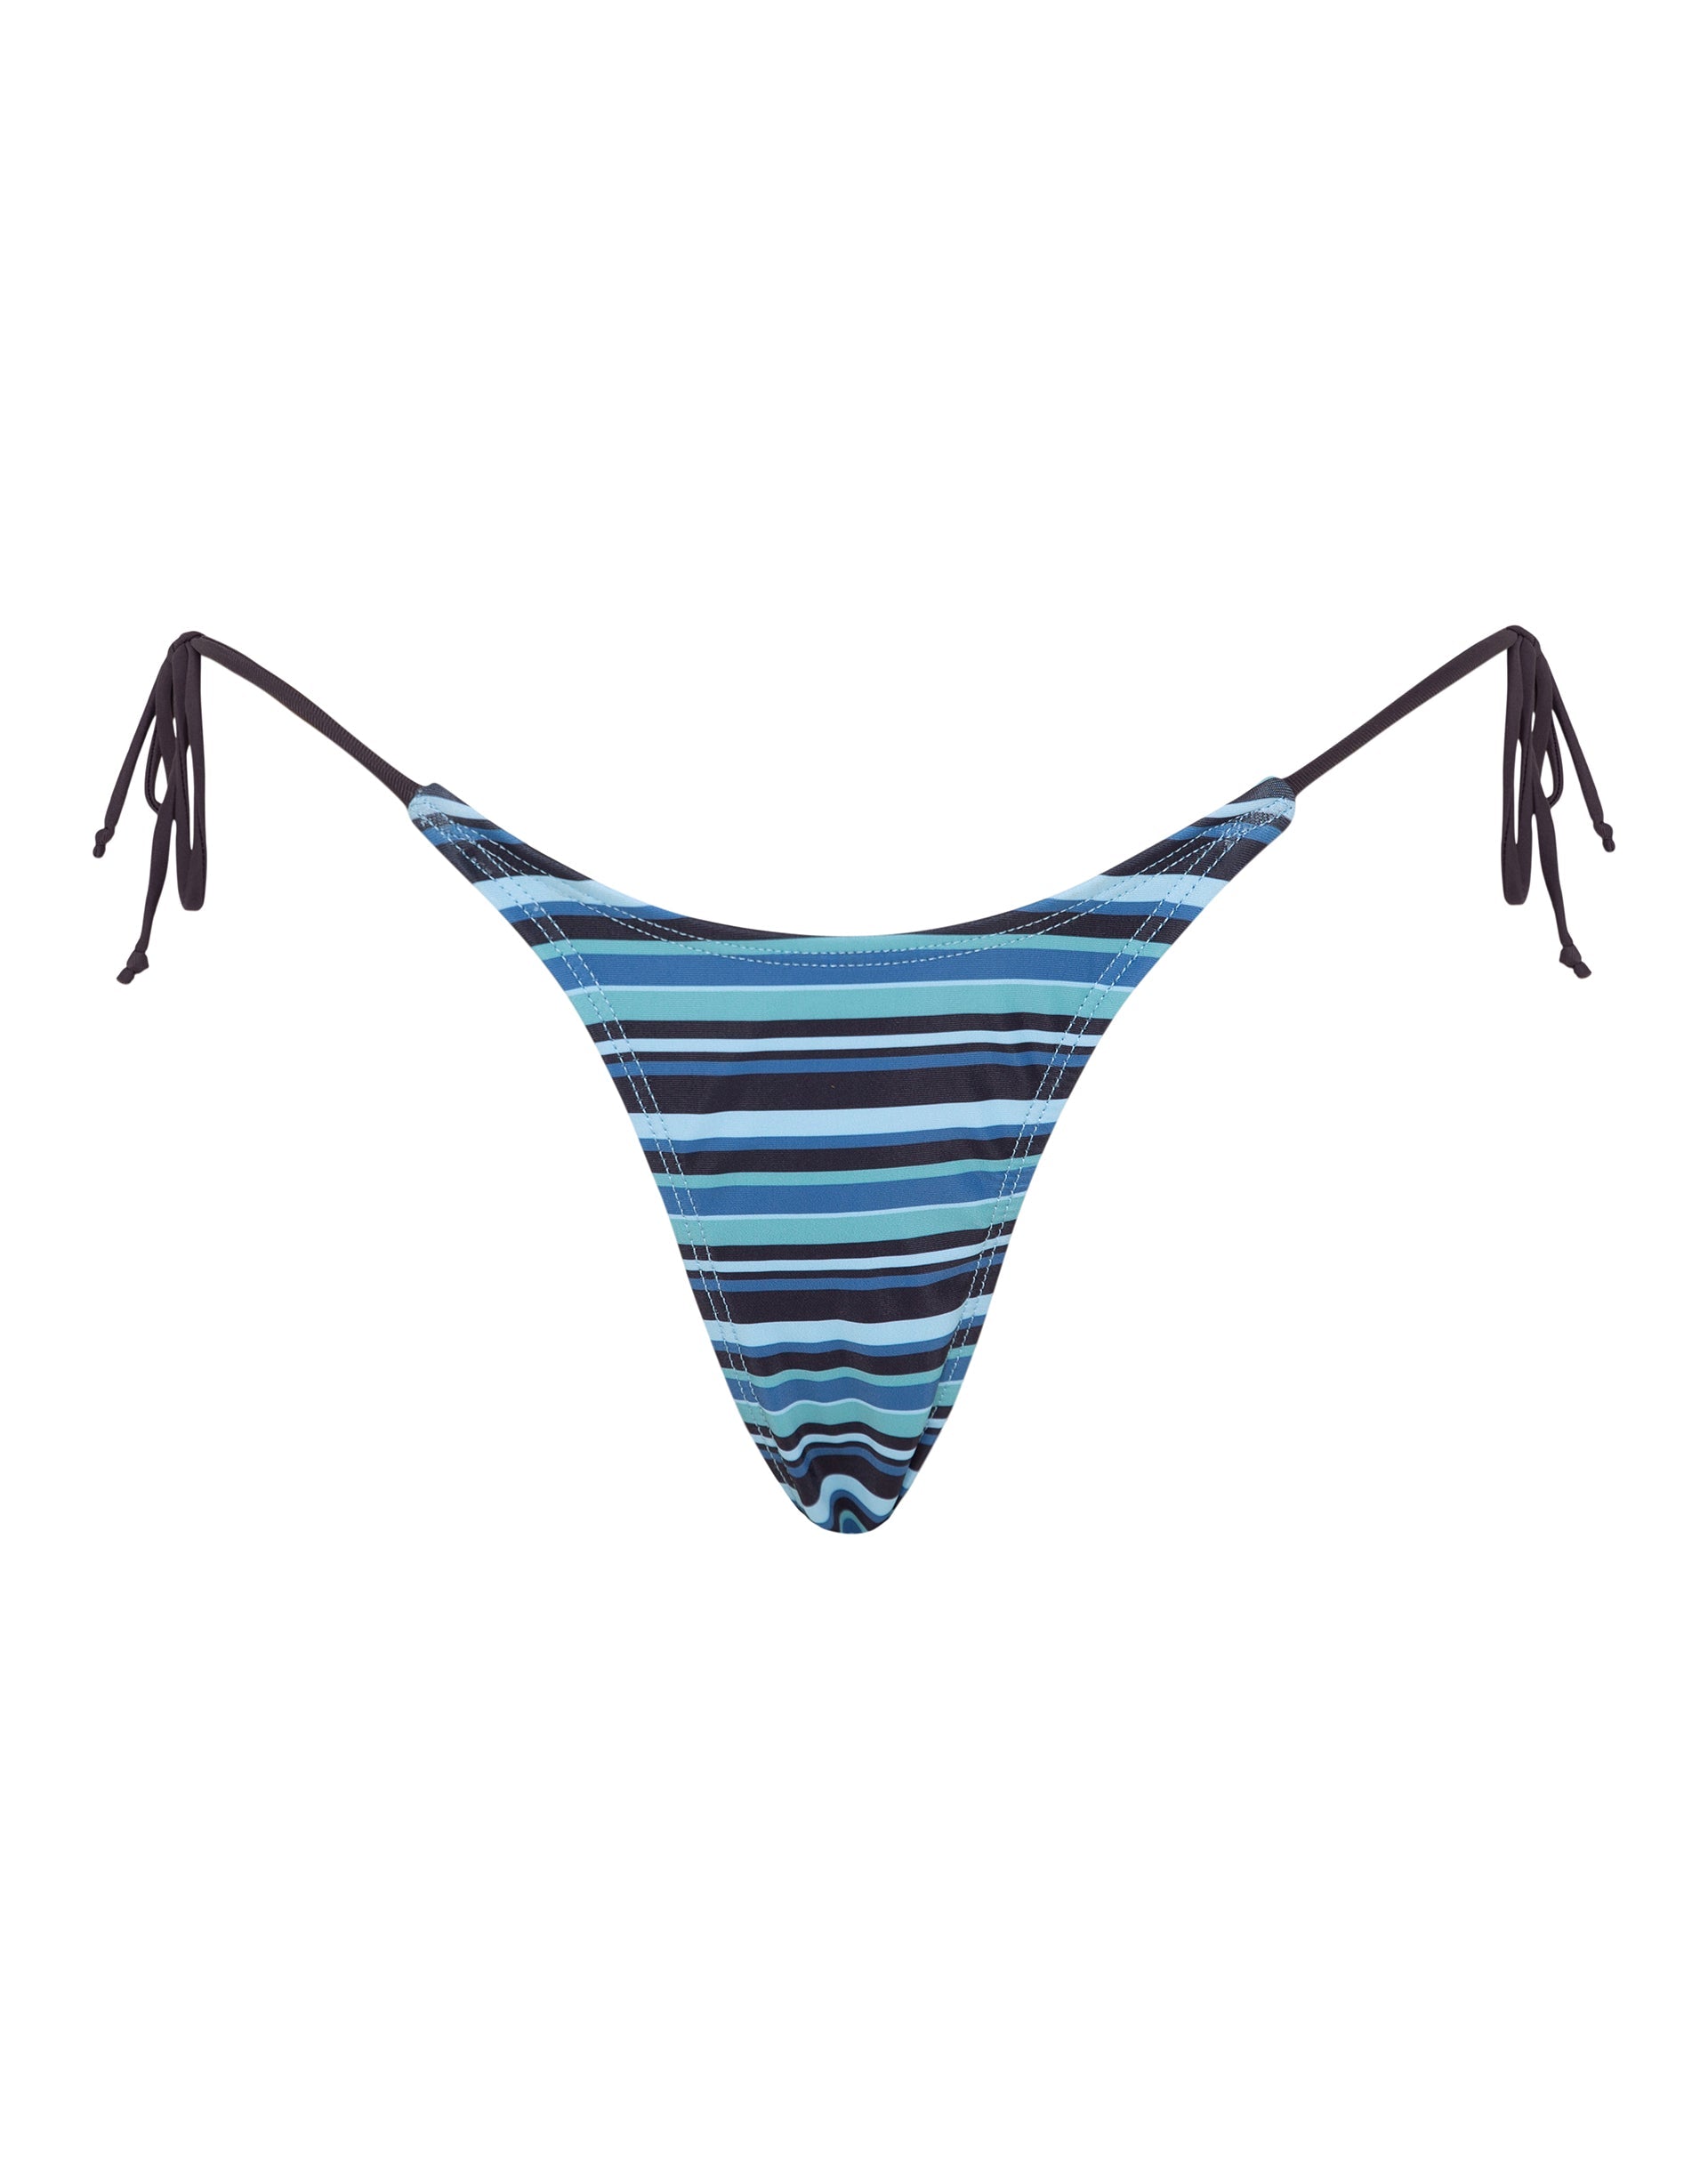 Image of Lentra Bikini Bottom in Stripe Blue with Brown Tie